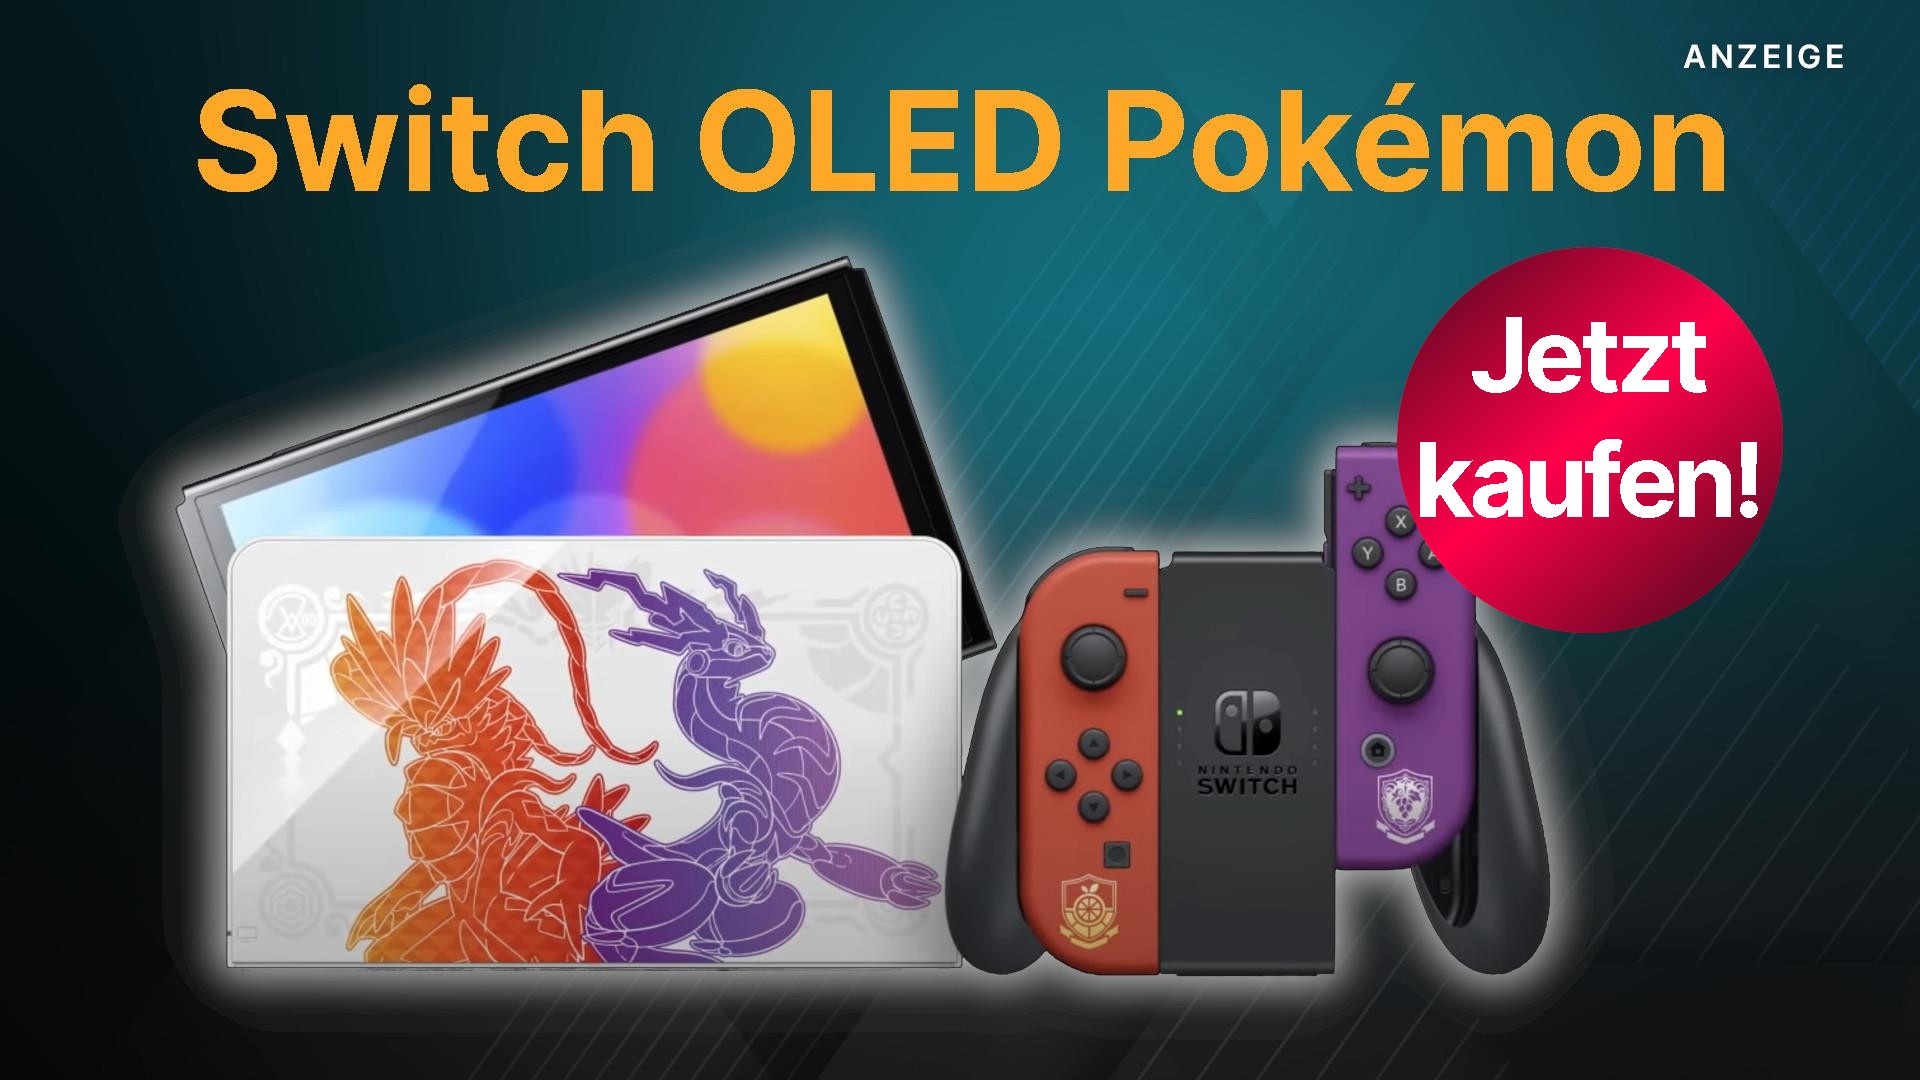 Switch OLED: Pokémon jetzt Special Karmesin Amazon bei kaufen Purpur Edition 